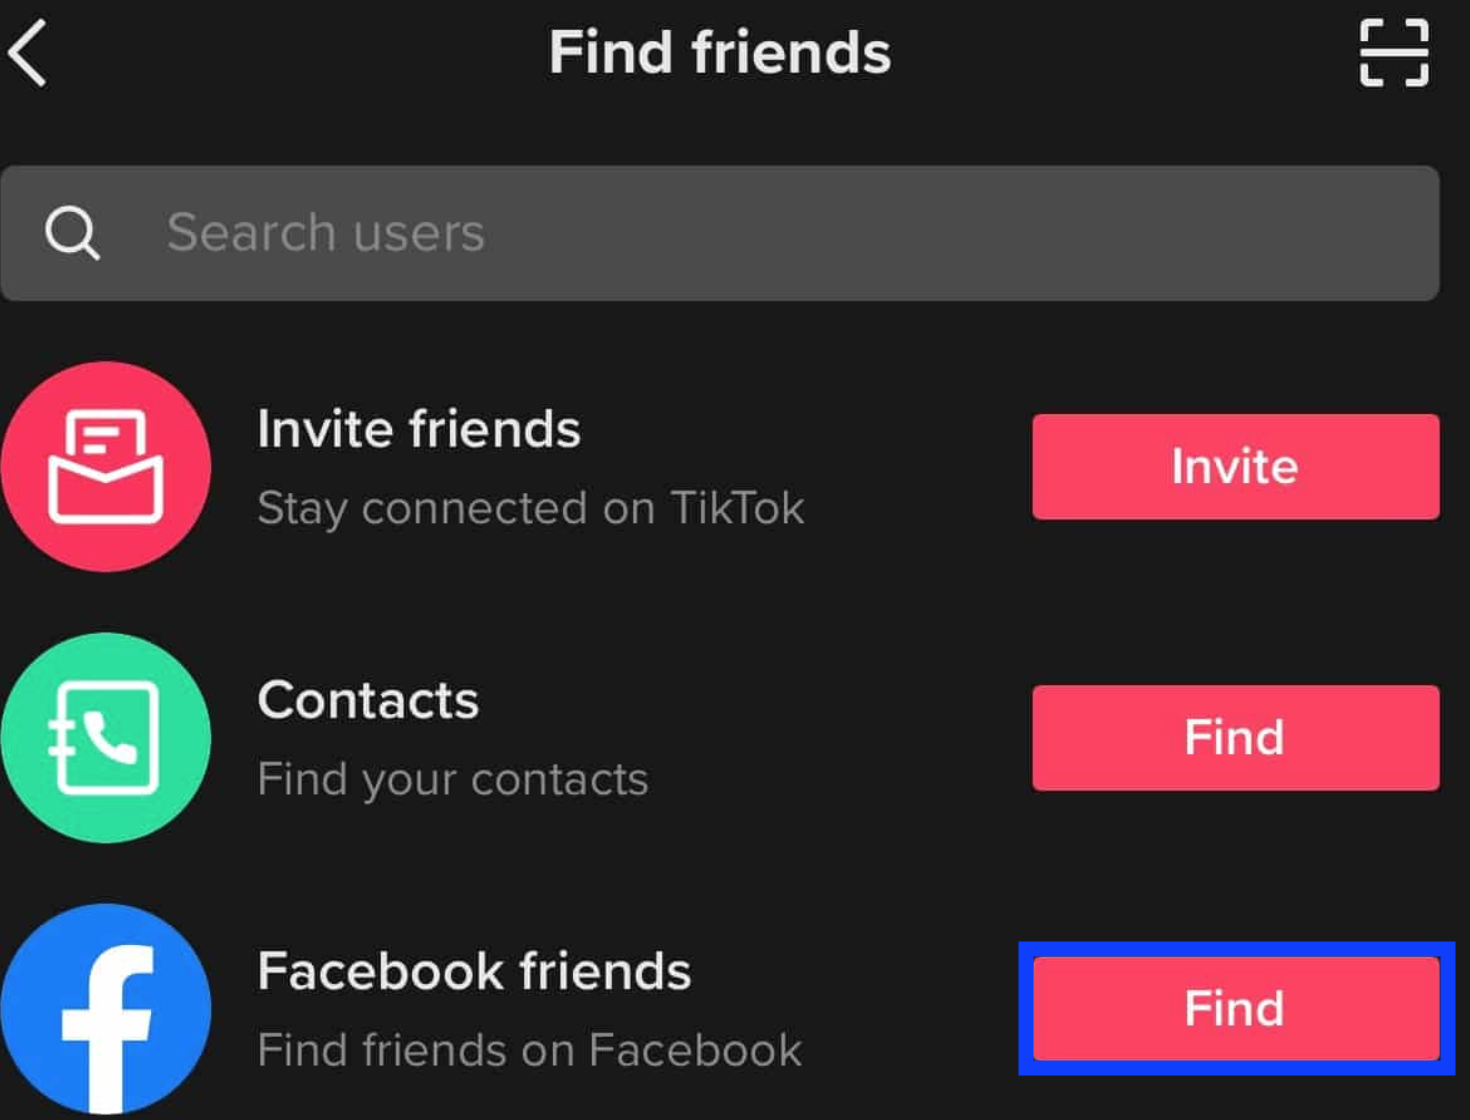 Find friends on Facebook - TikTok options